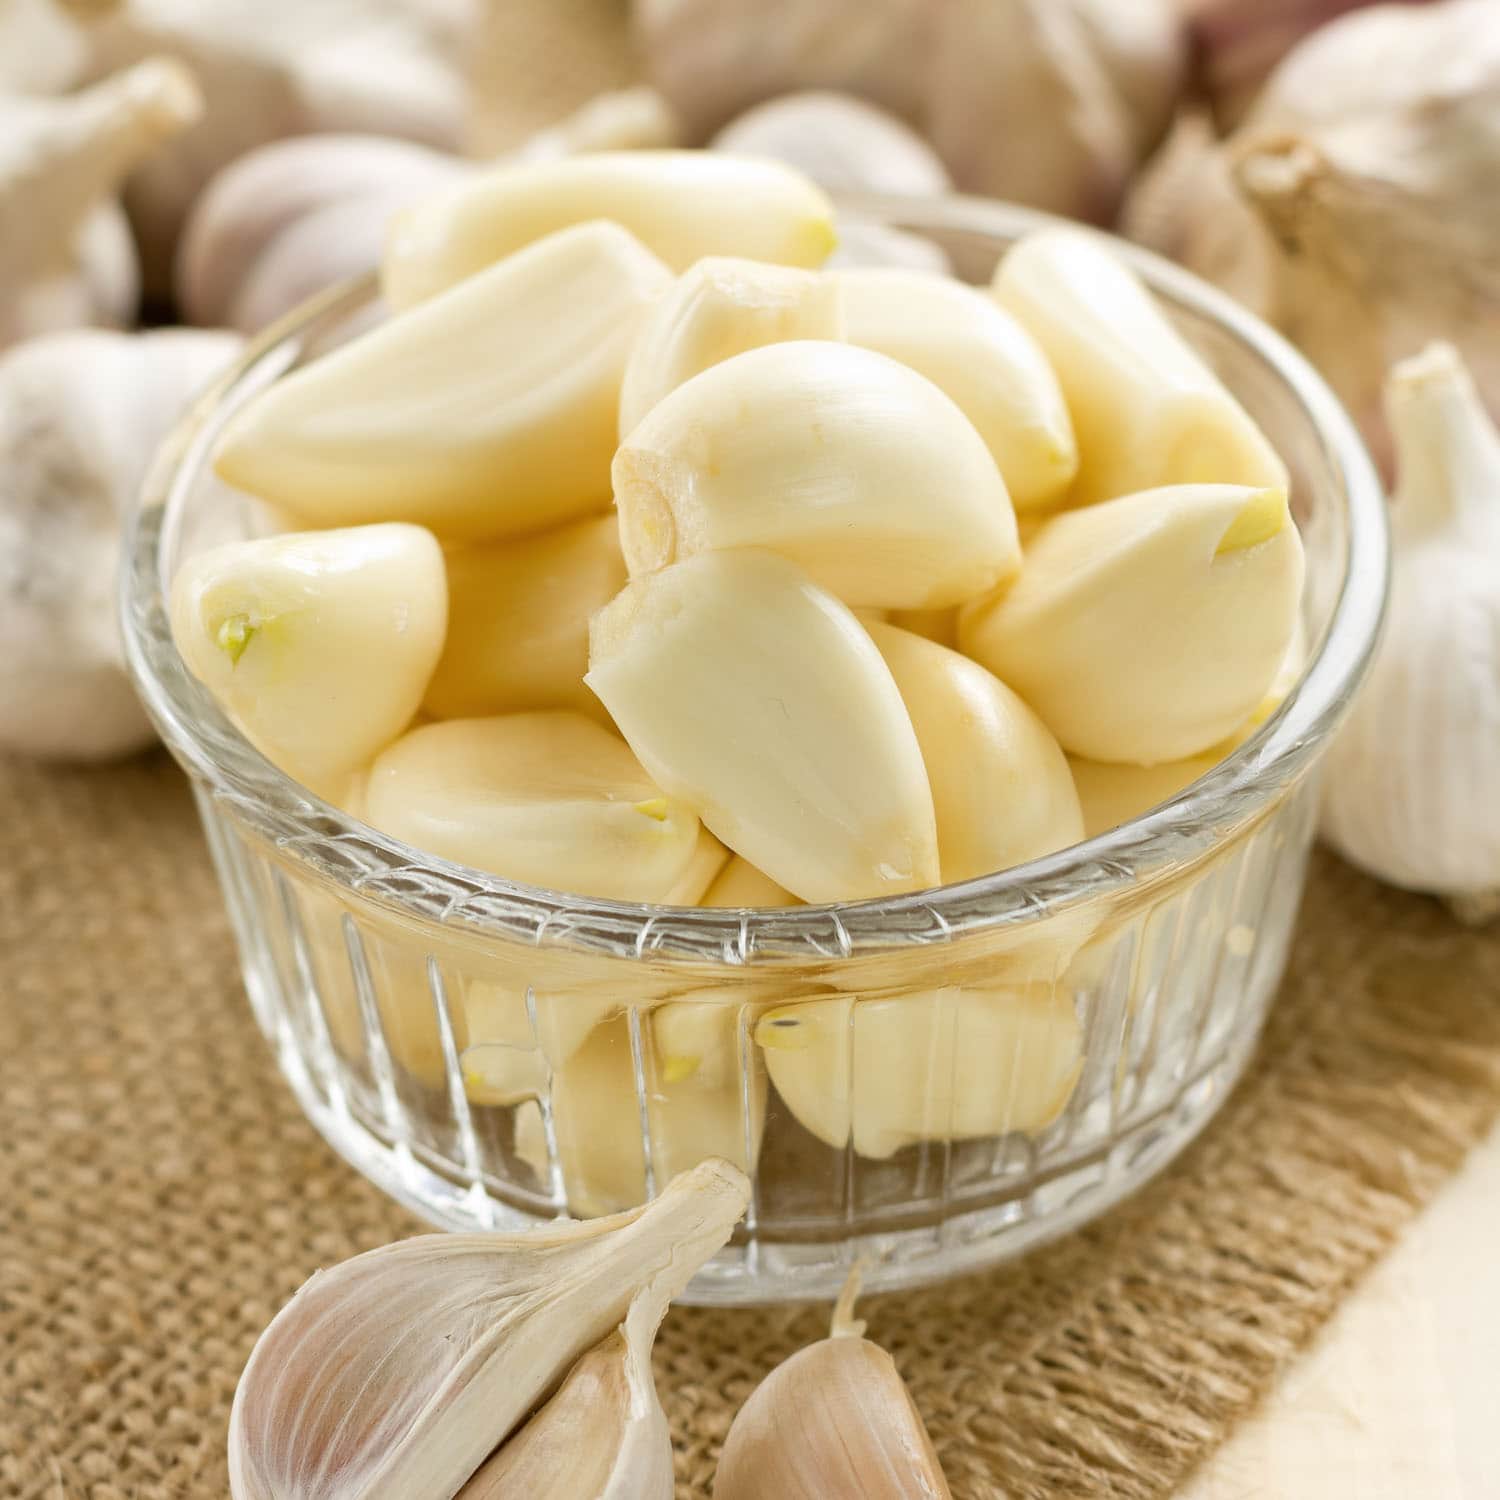 How To Store Peeled Garlic In Fridge